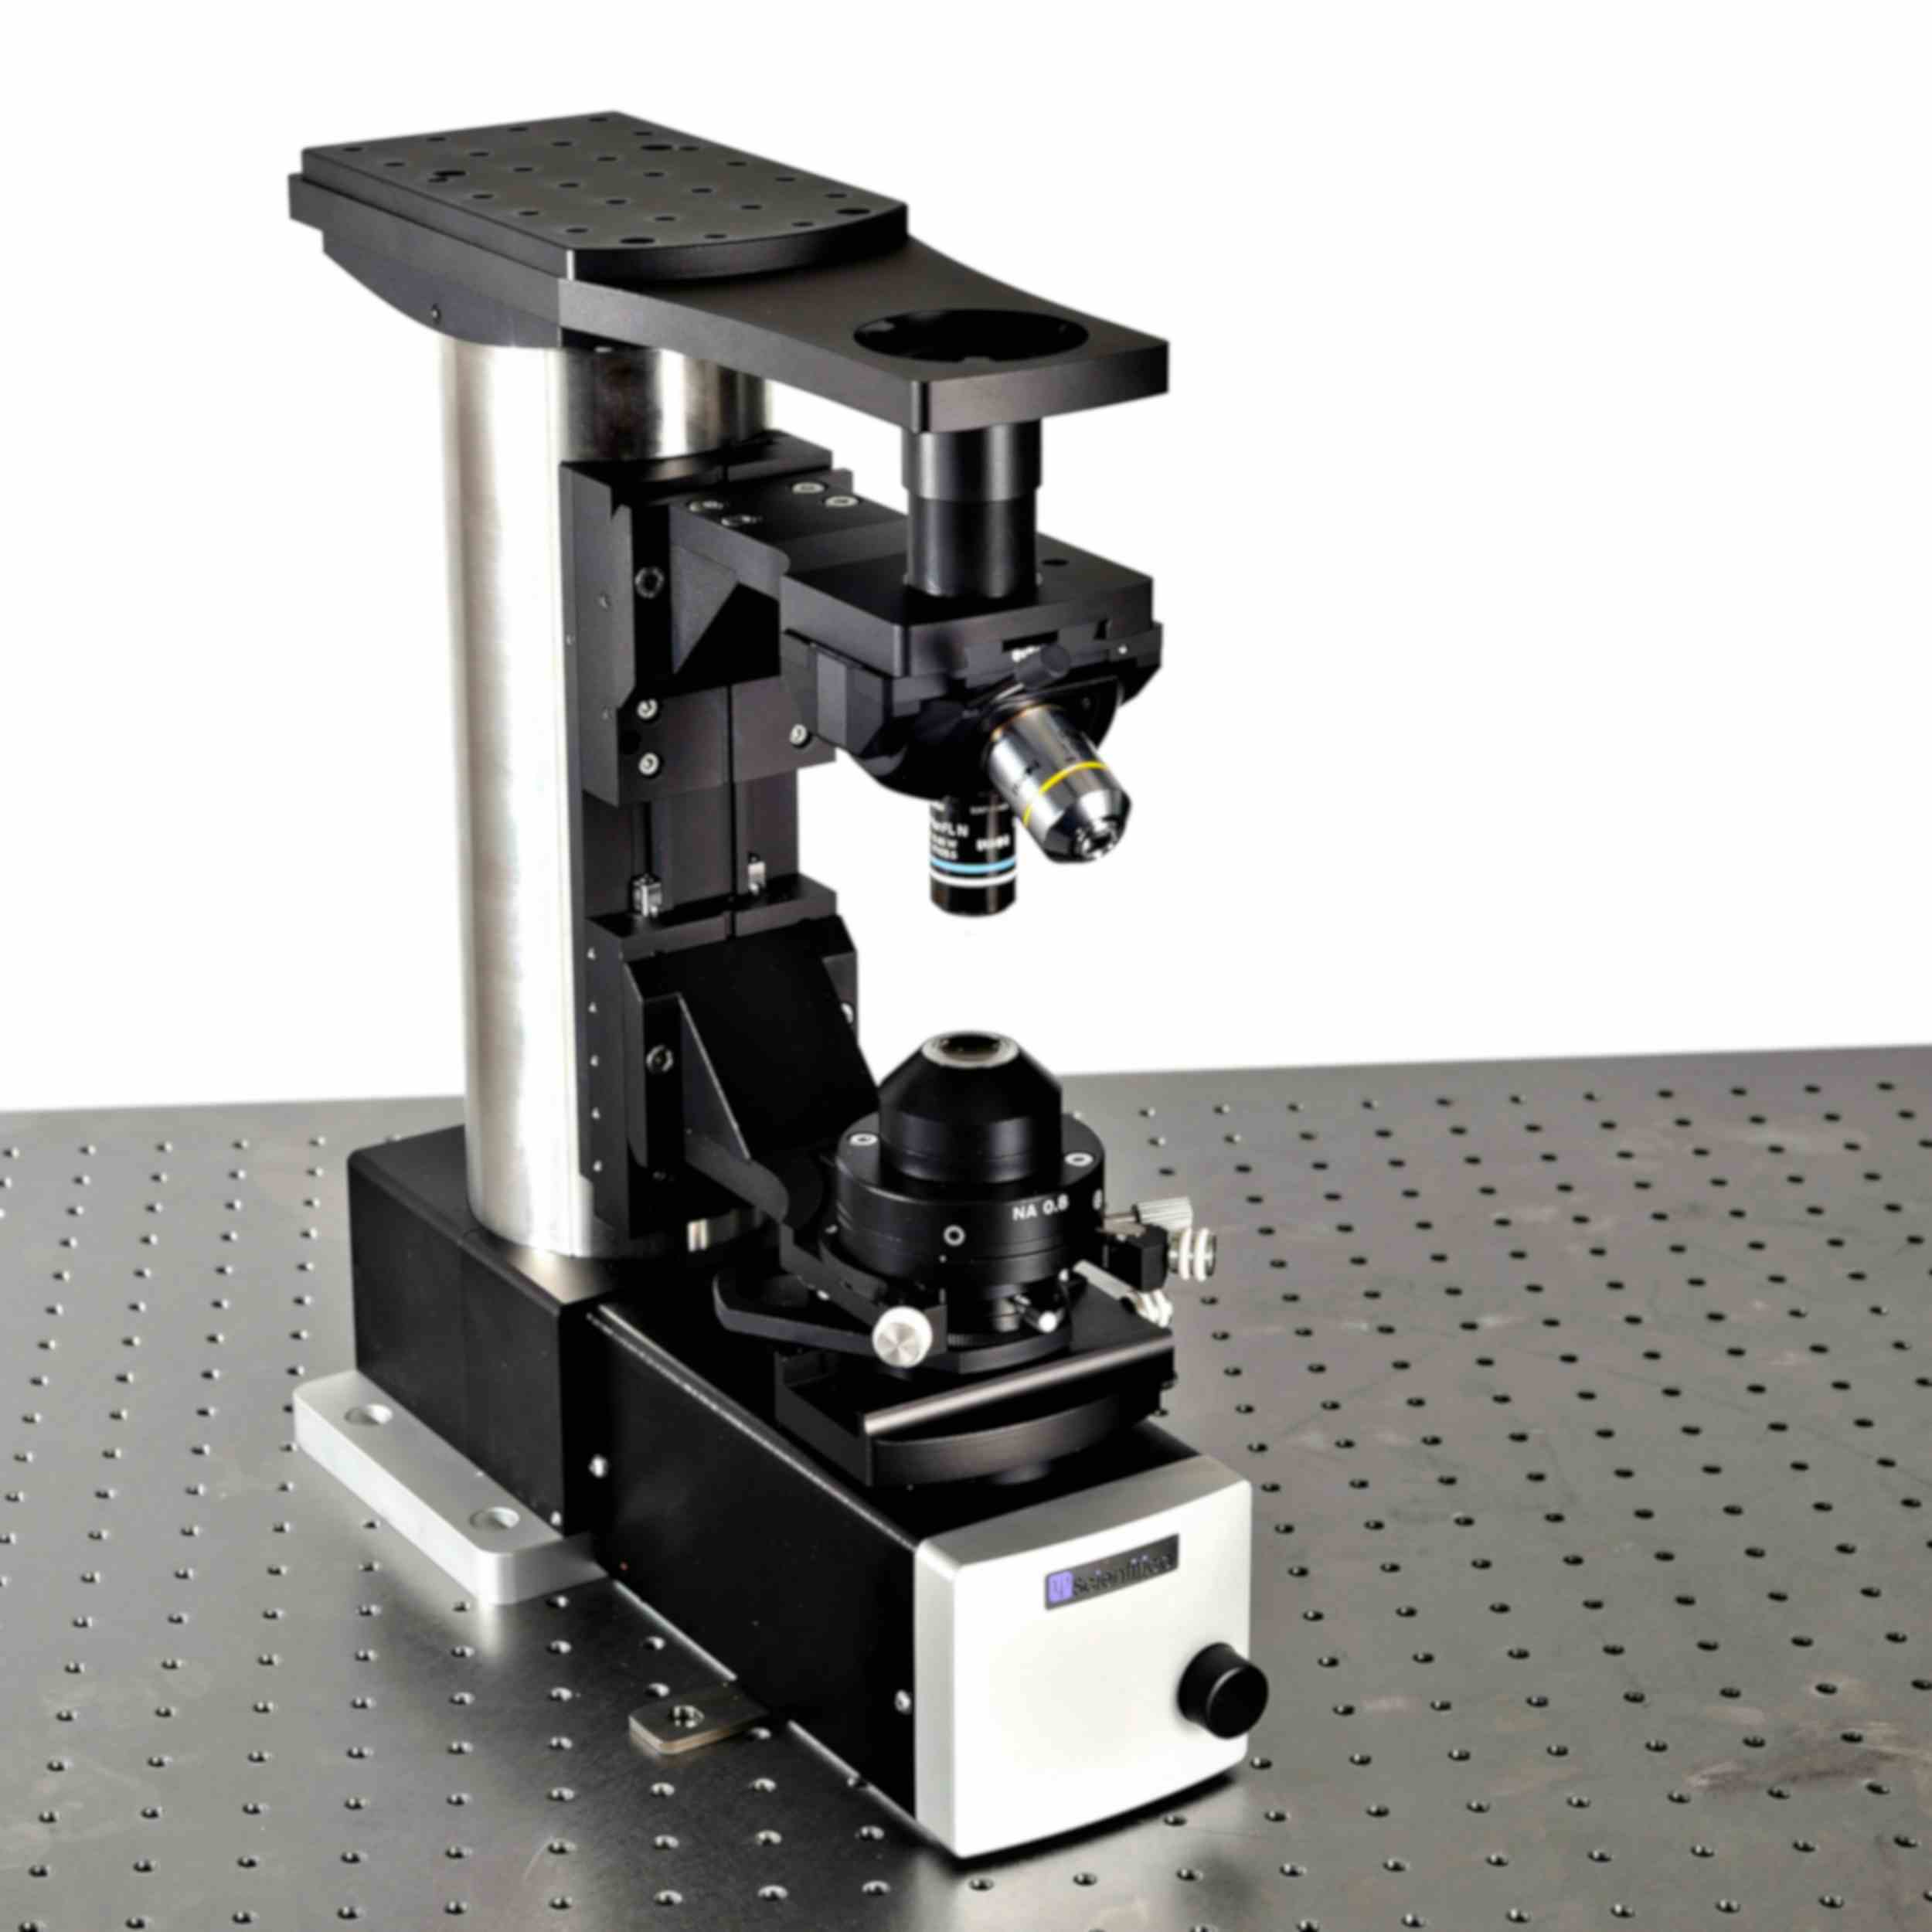 Scientifica SliceScope microscope in vitro set up